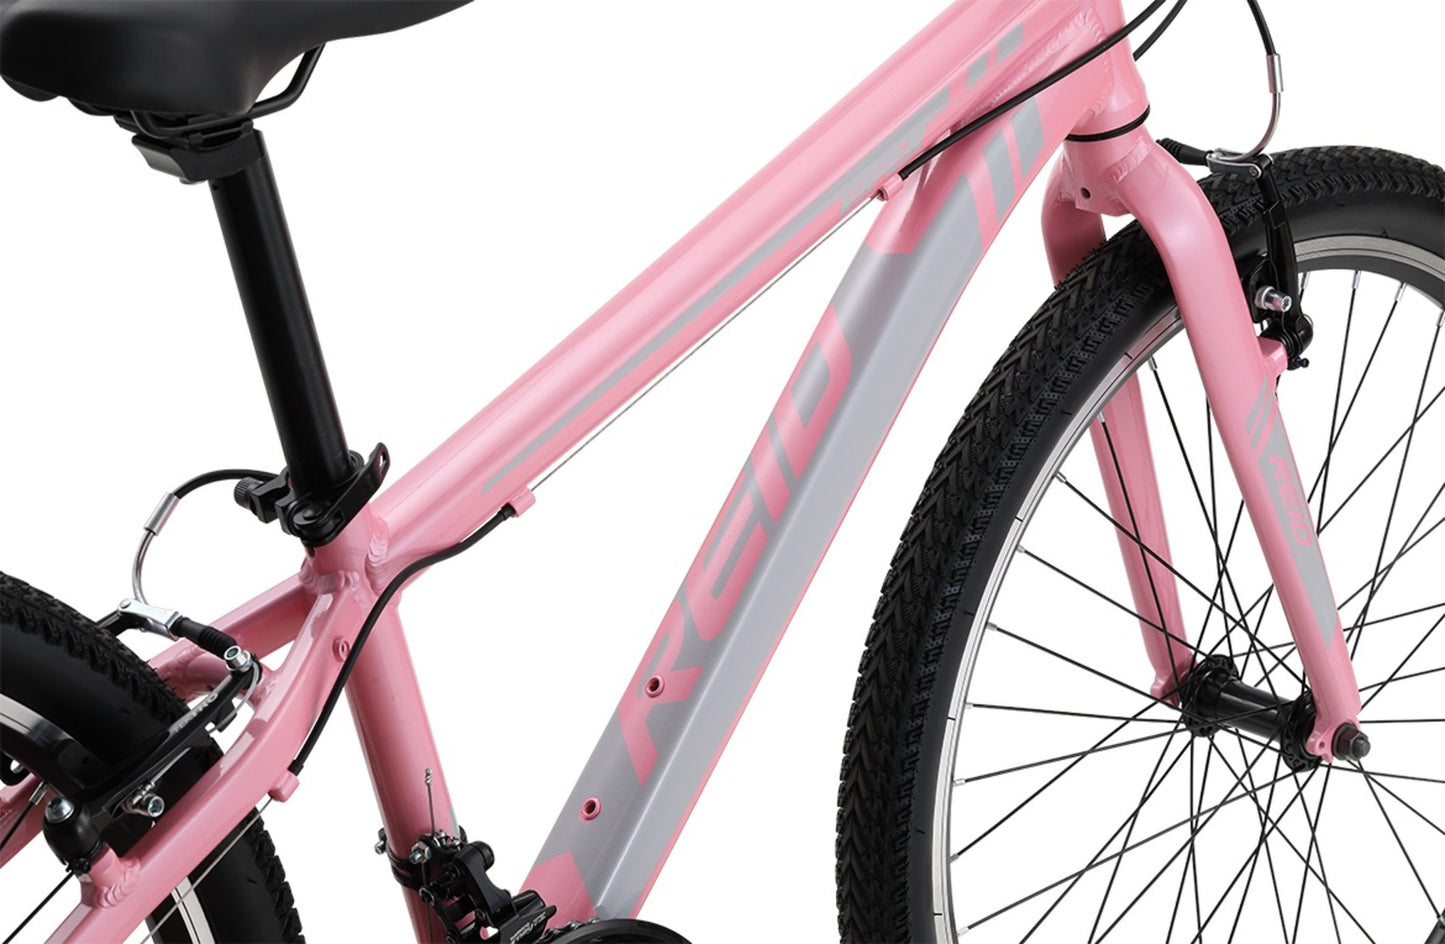 Viper 20" Kids Bike in Pink showing Reid logo on bike frame from Reid Cycles Australia 